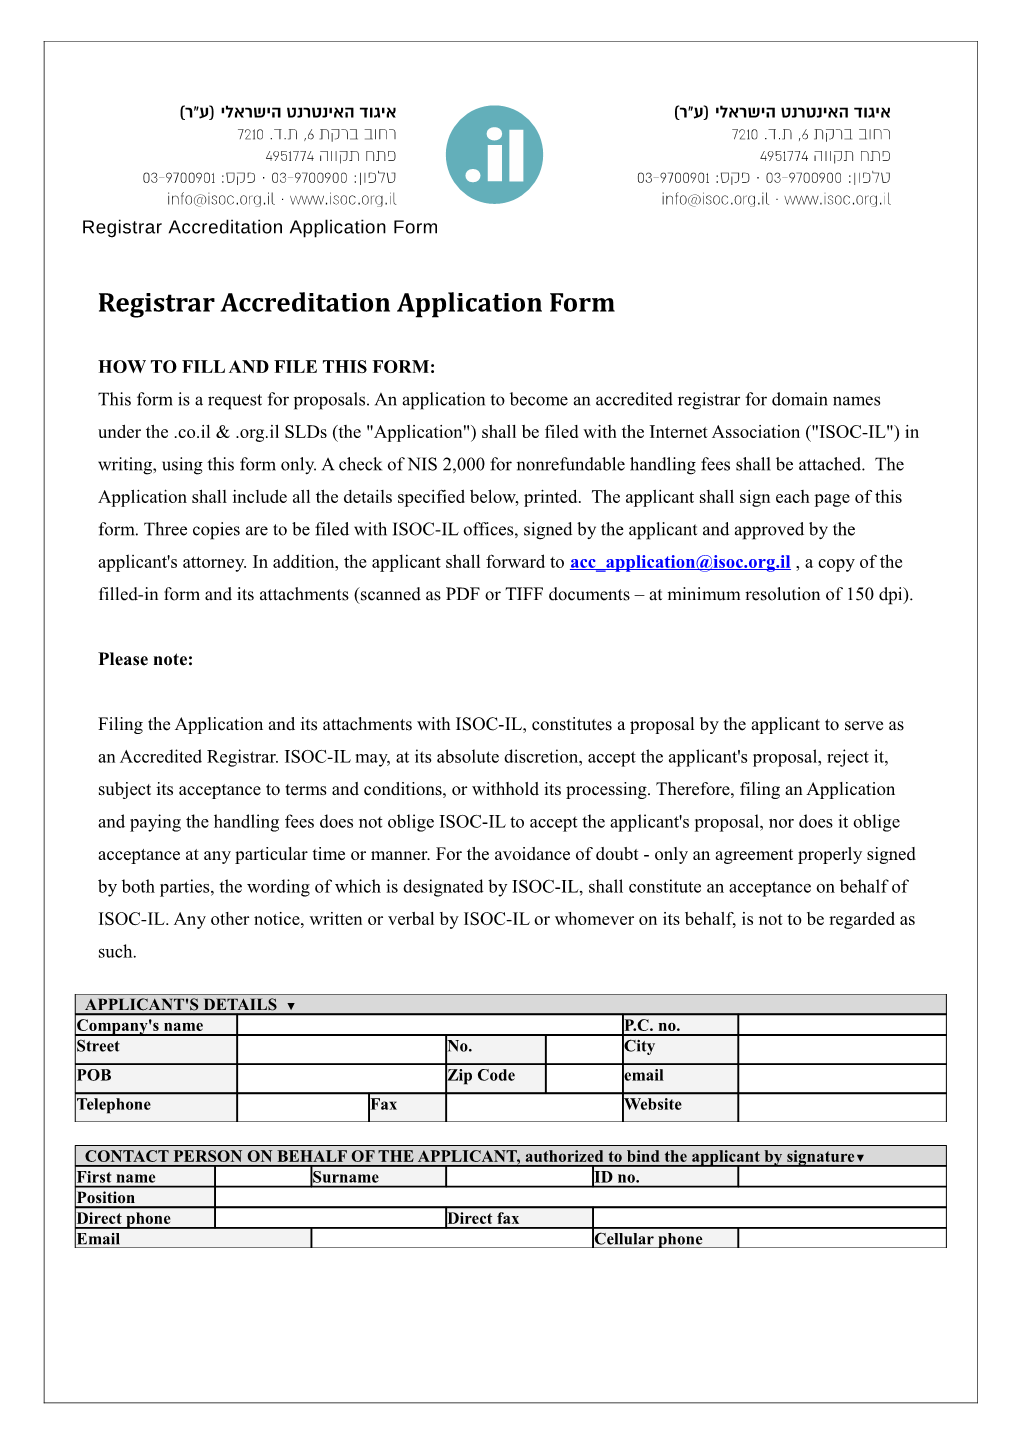 Registrar Accreditation Application Form